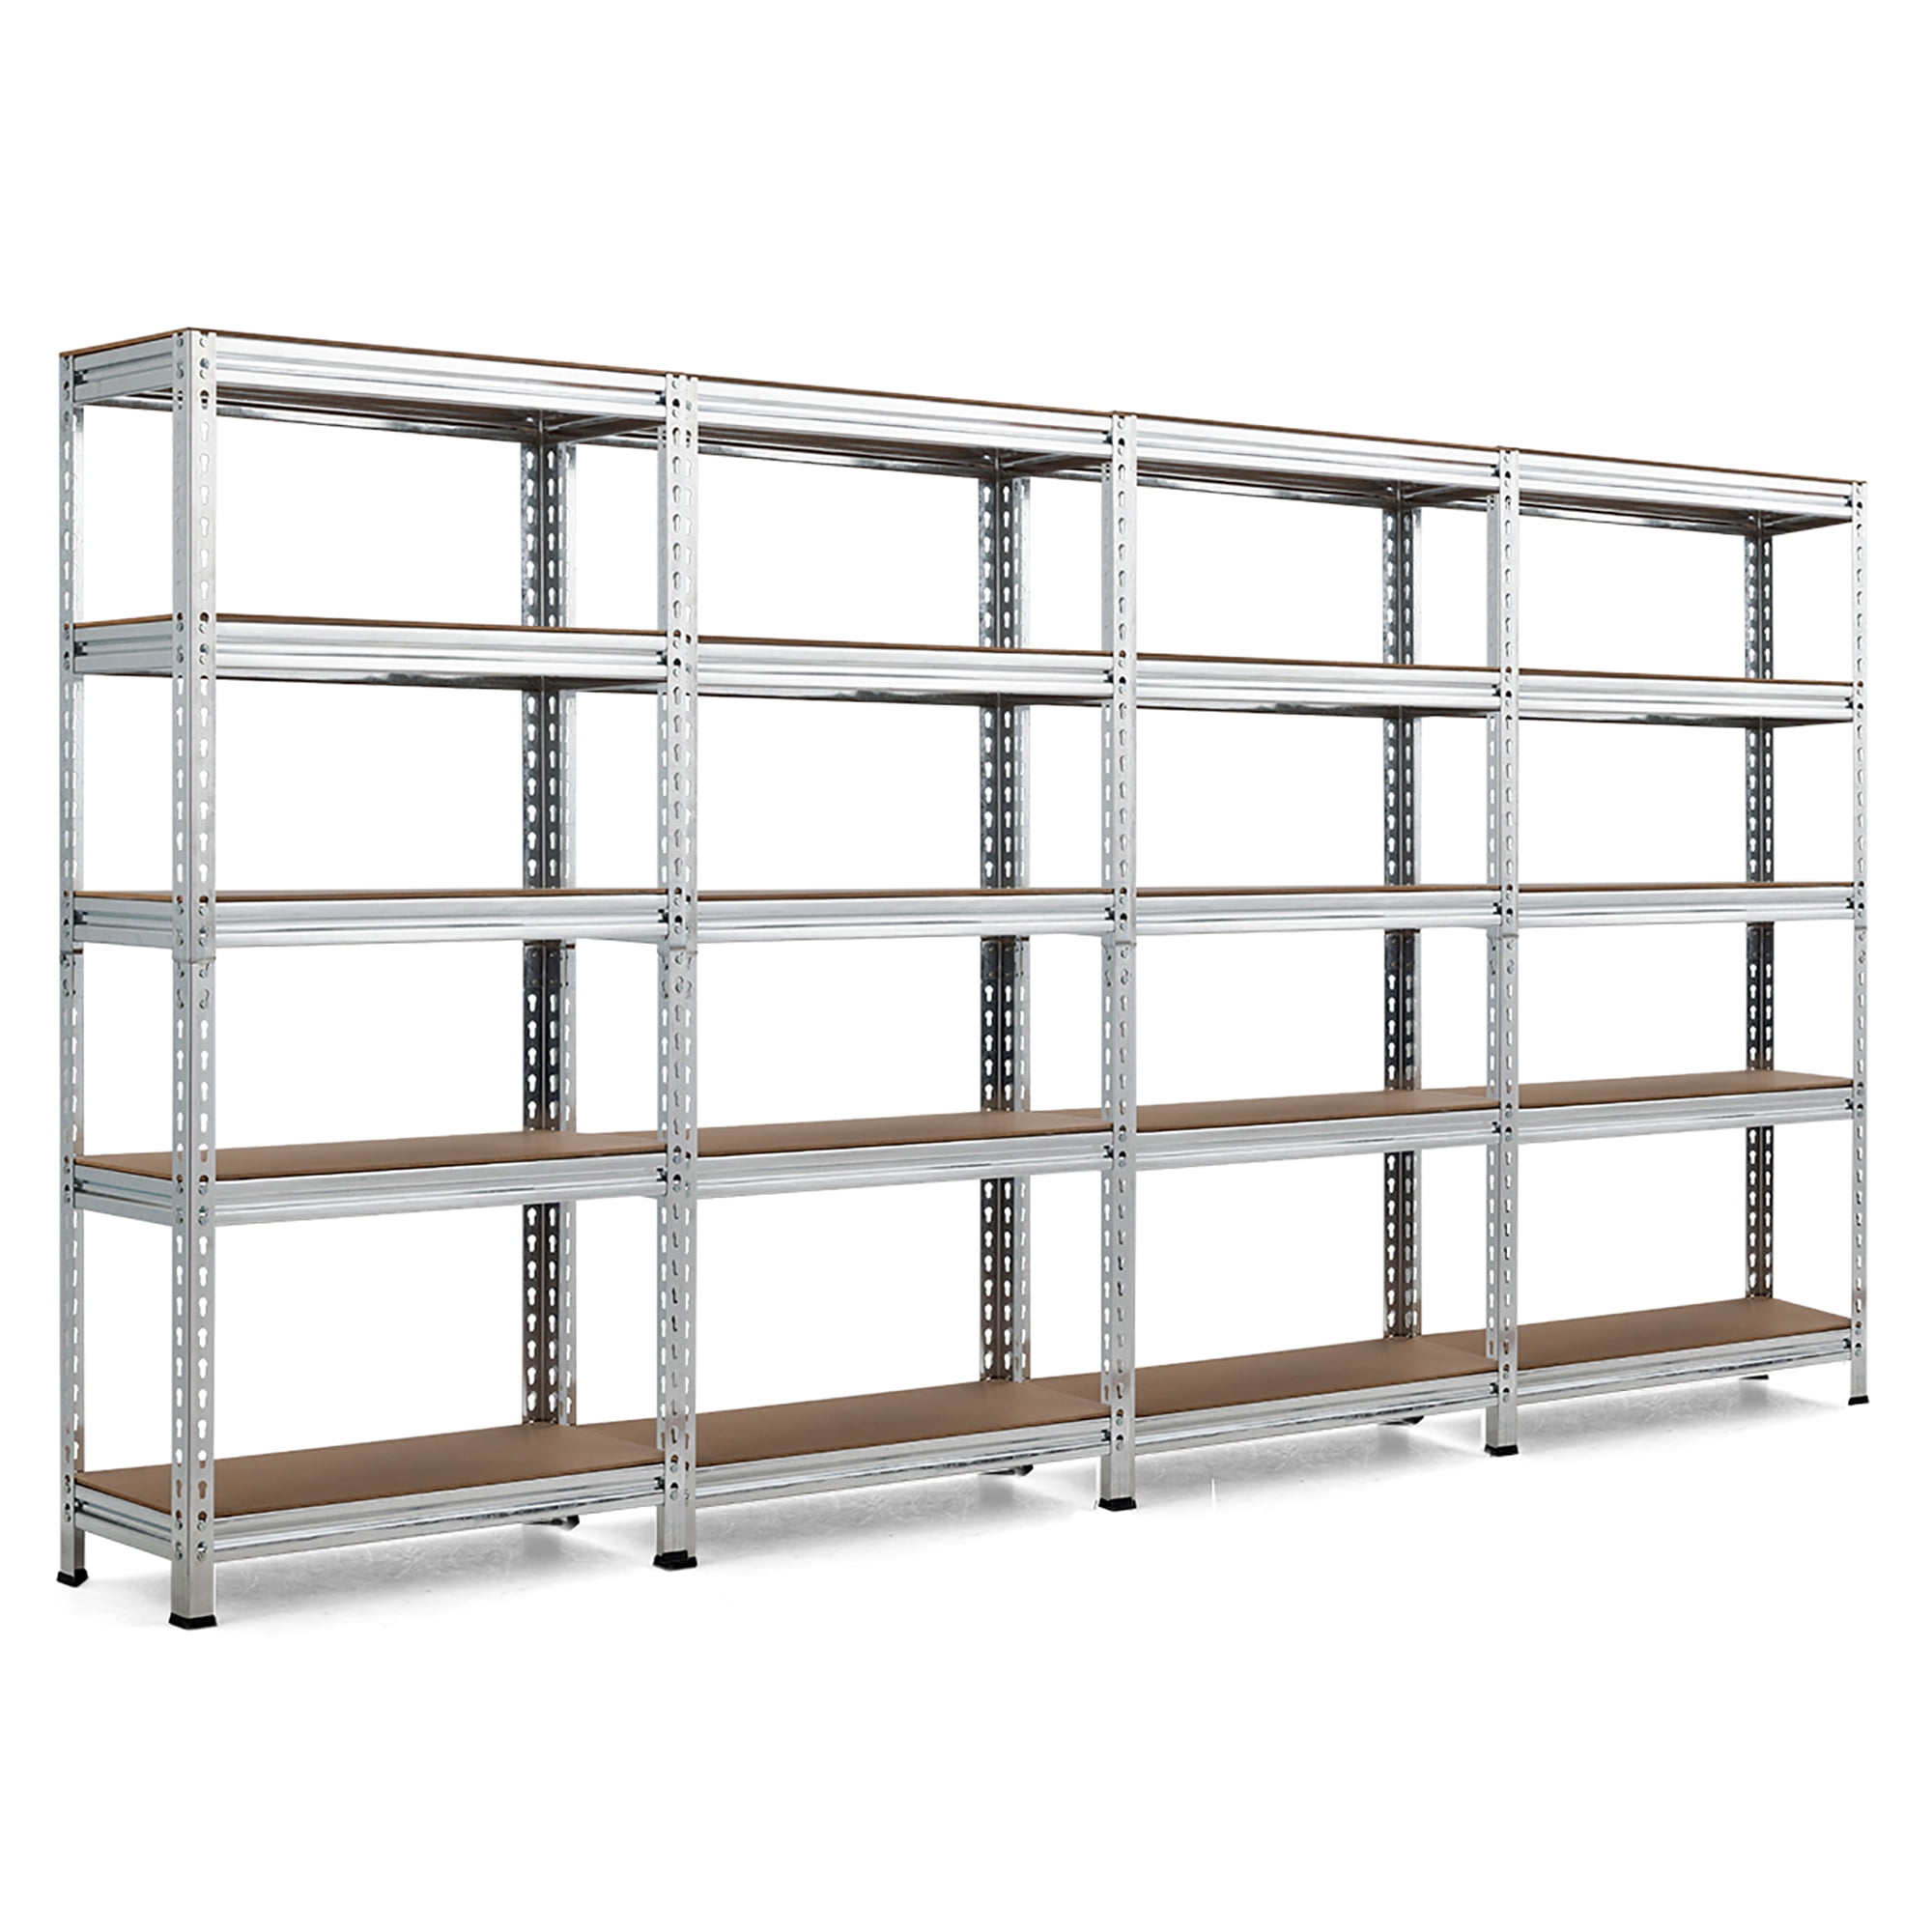 5 Tier Metal Storage Shelves 60, Inexpensive Storage Shelving